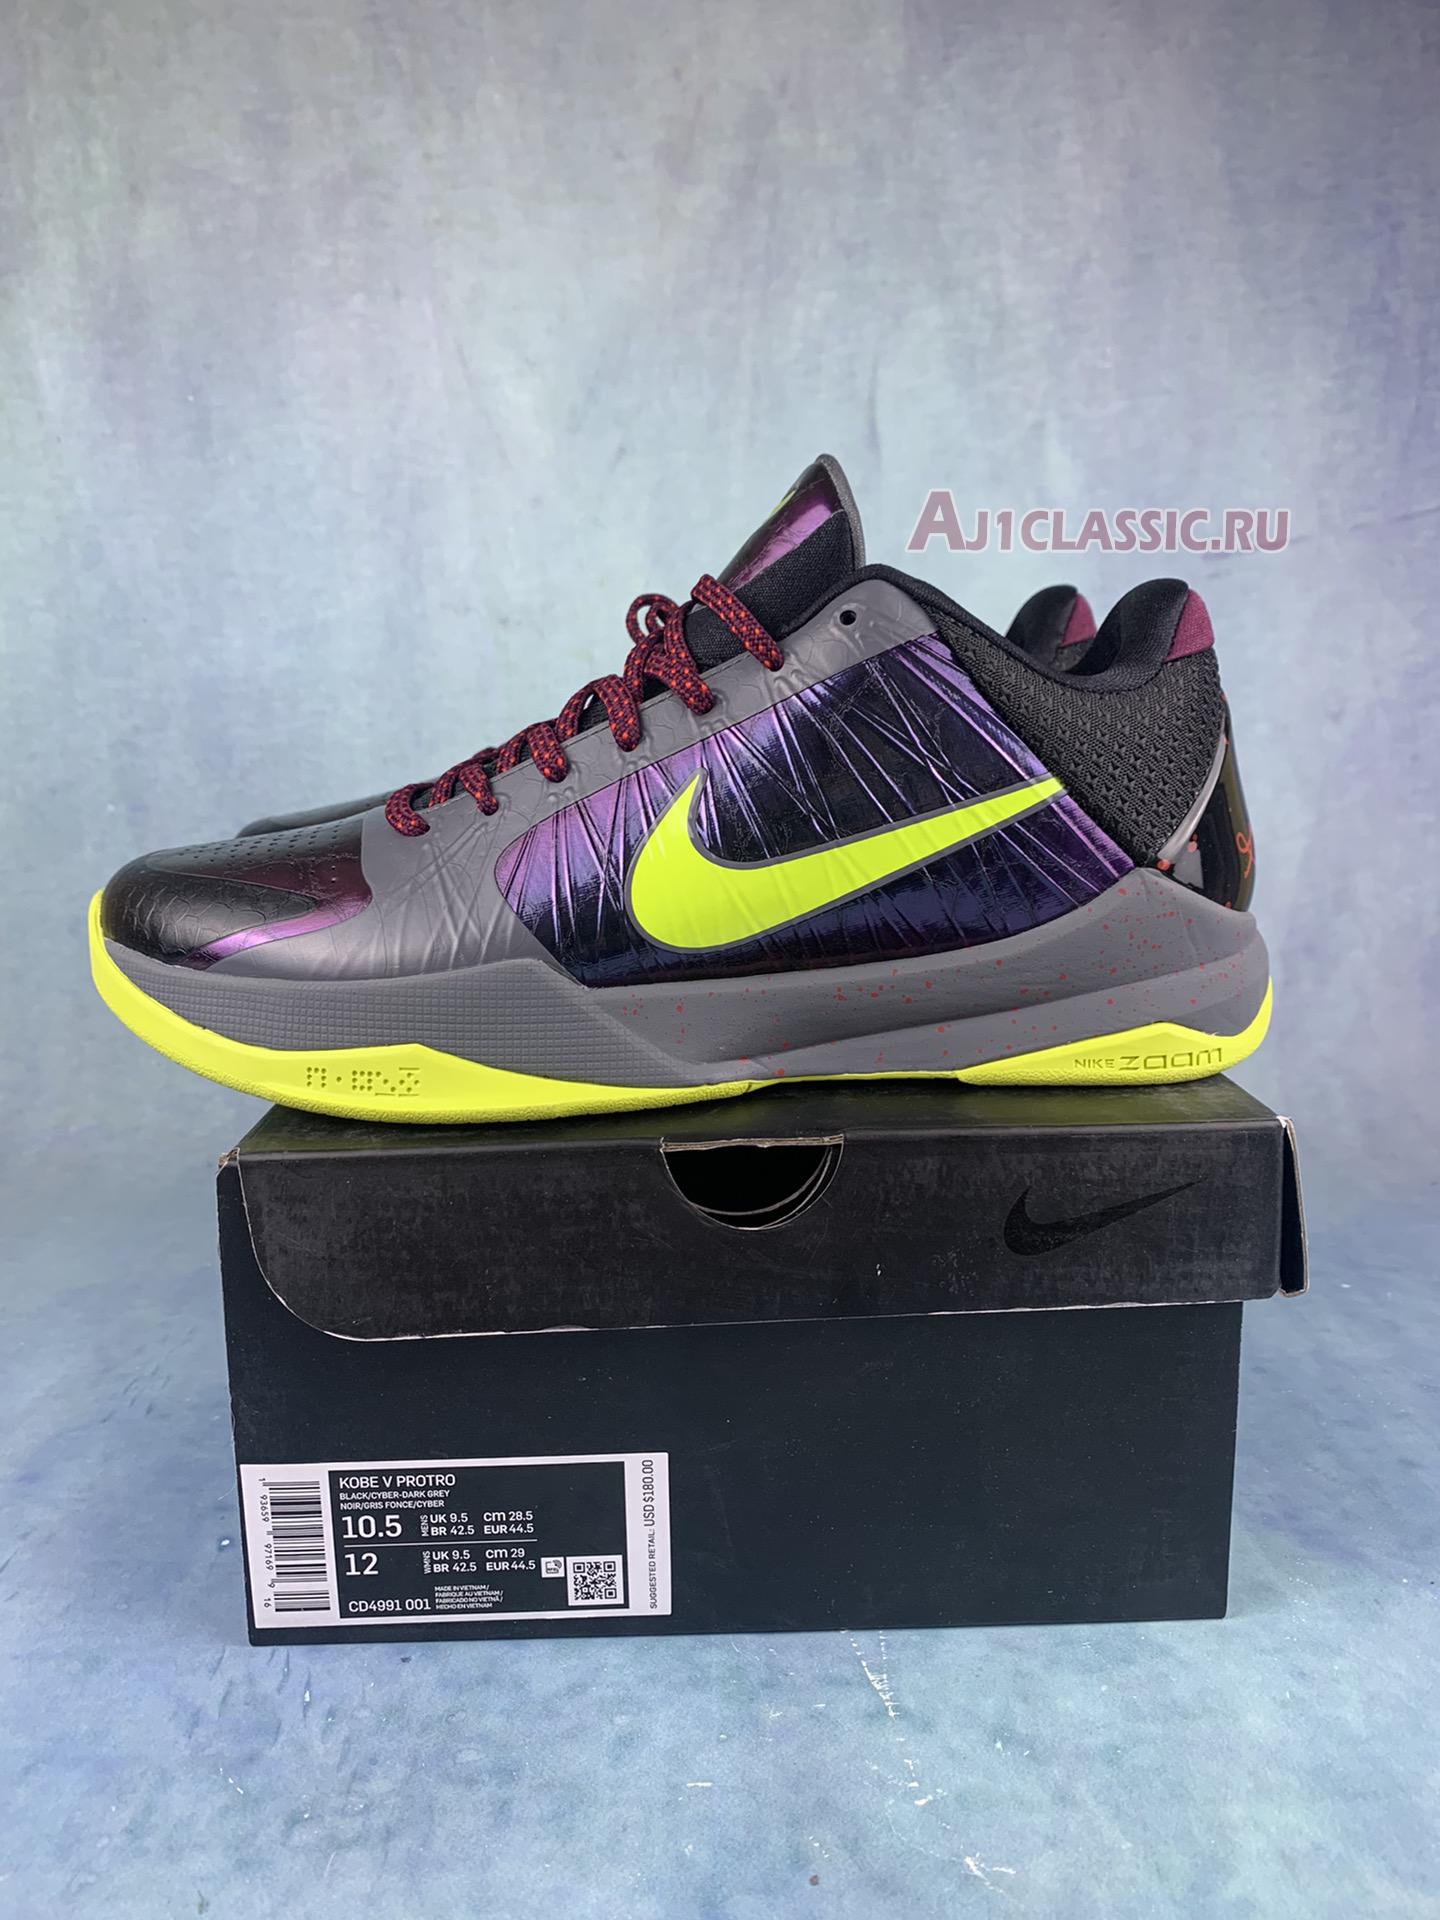 NBA 2K20 x Nike Kobe 5 Protro Chaos Alternate Gamer Exclusive CD4991-001 Black/Dark Grey-Bright Crimson-Cyber Sneakers